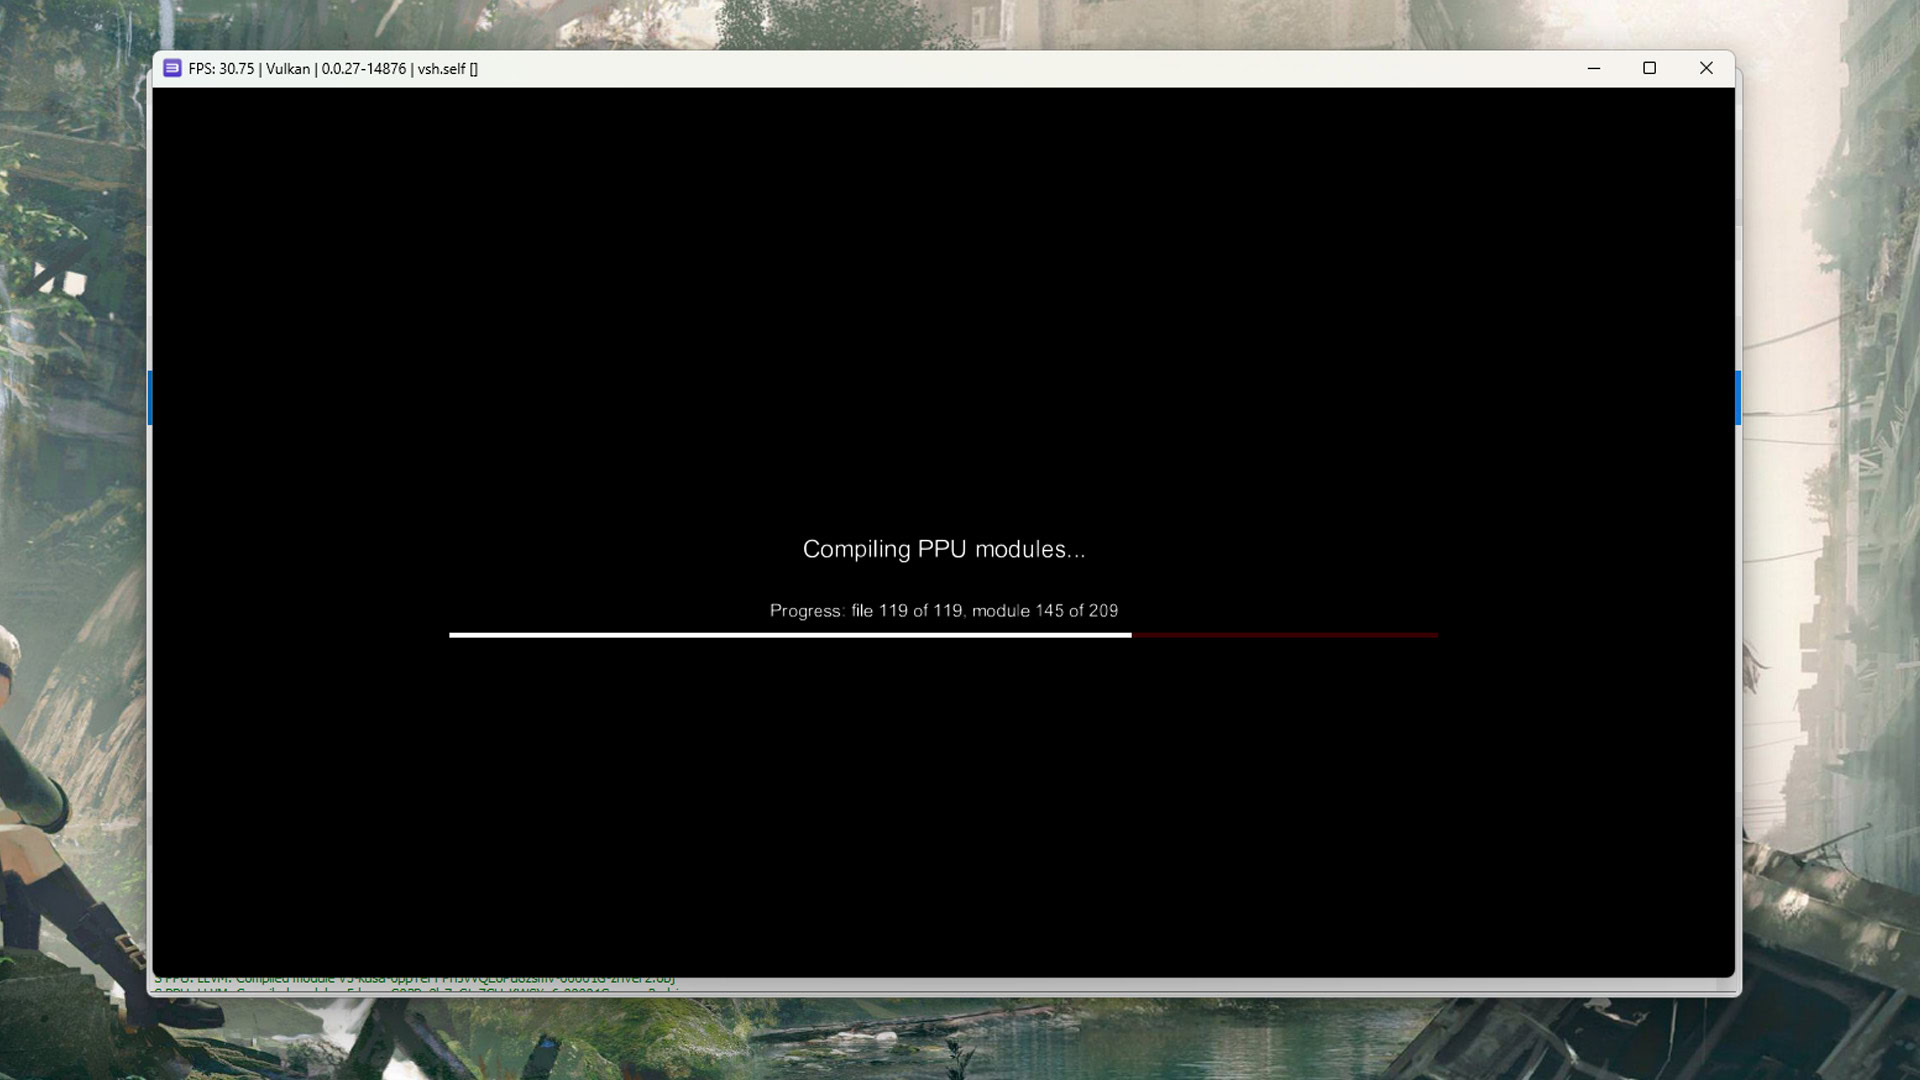 RPCS3 Emulator, The Last of Us